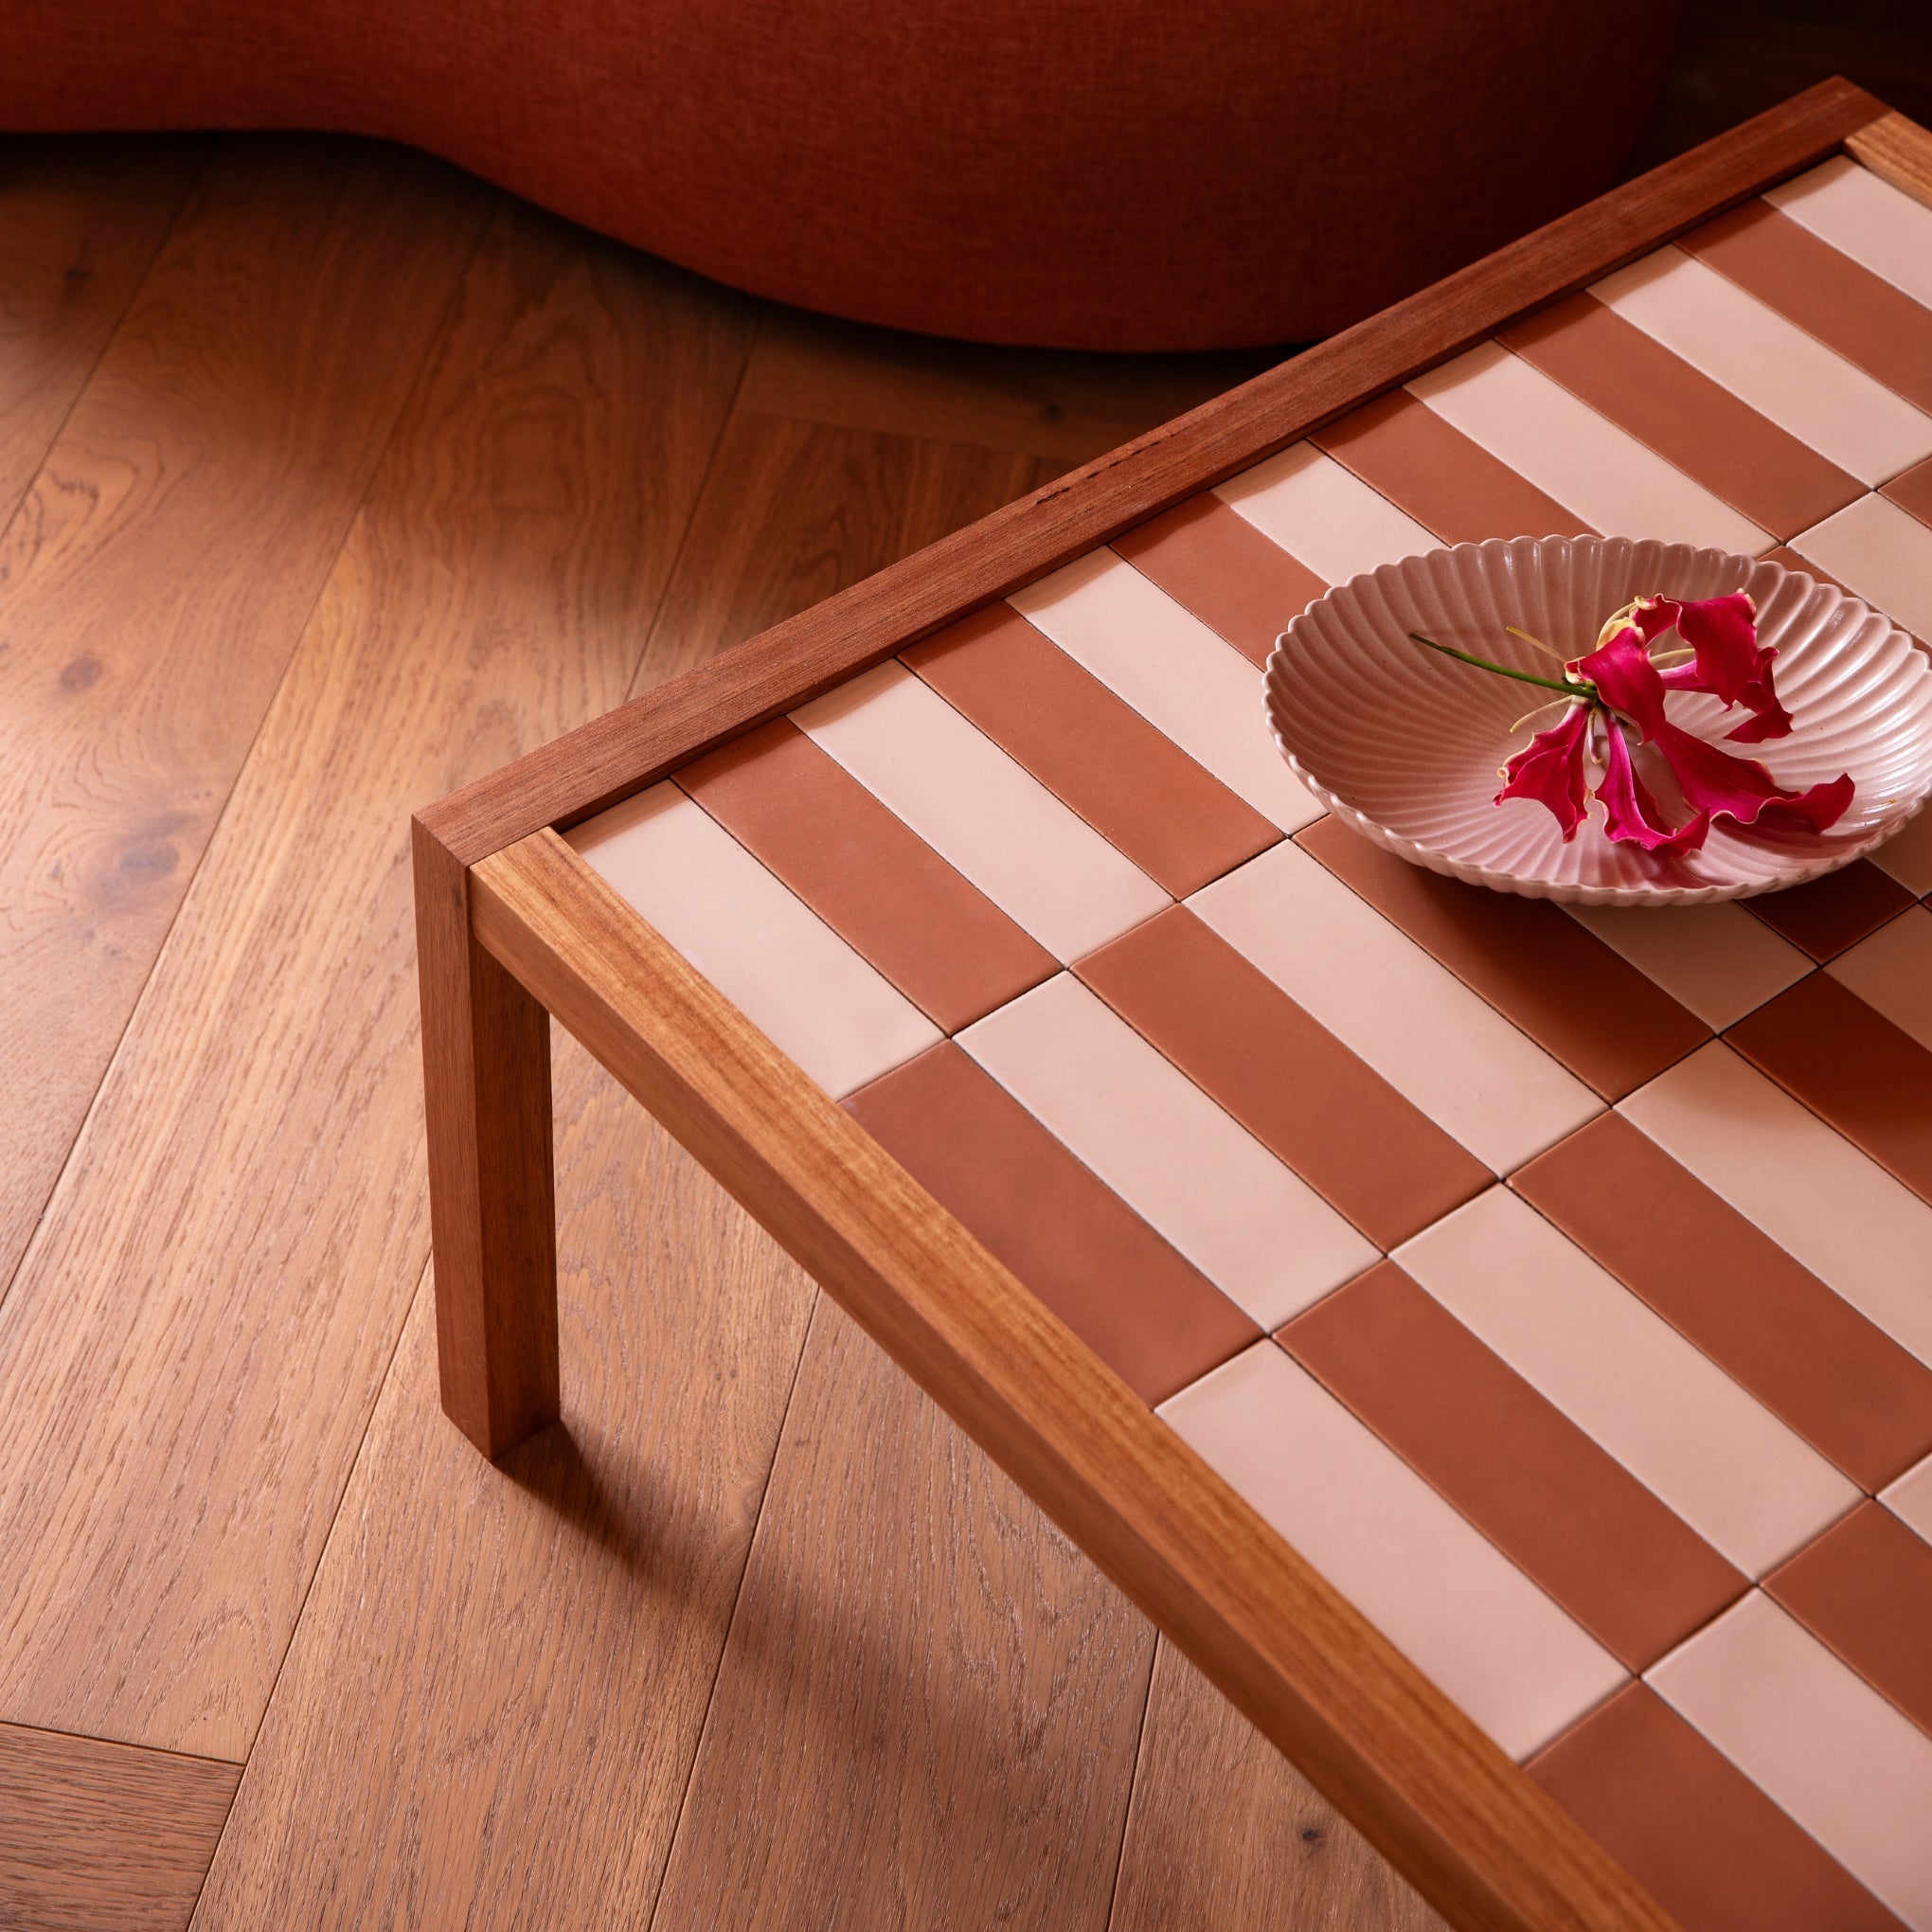 Tiled Coffee Table Blush Terracotta